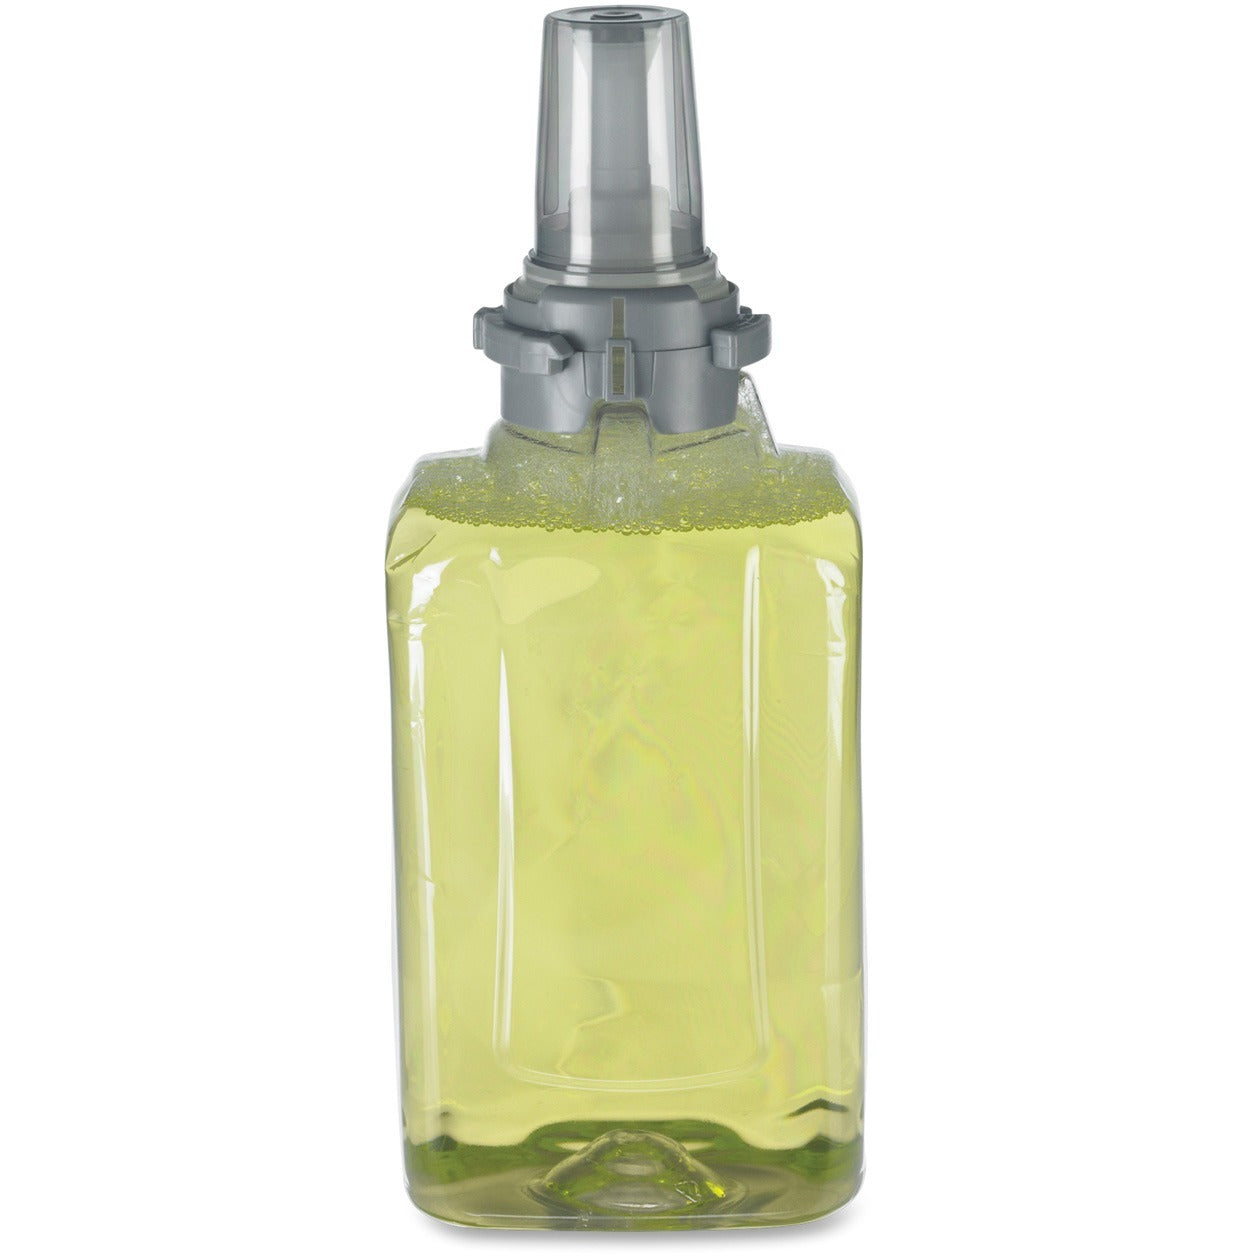 gojo-adx-12-gingercitrus-handwash-refill-ginger-citrus-scentfor-423-fl-oz-1250-ml-pump-bottle-dispenser-kill-germs-hand-skin-hair-moisturizing-green-bio-based-3-carton_goj881303ct - 3